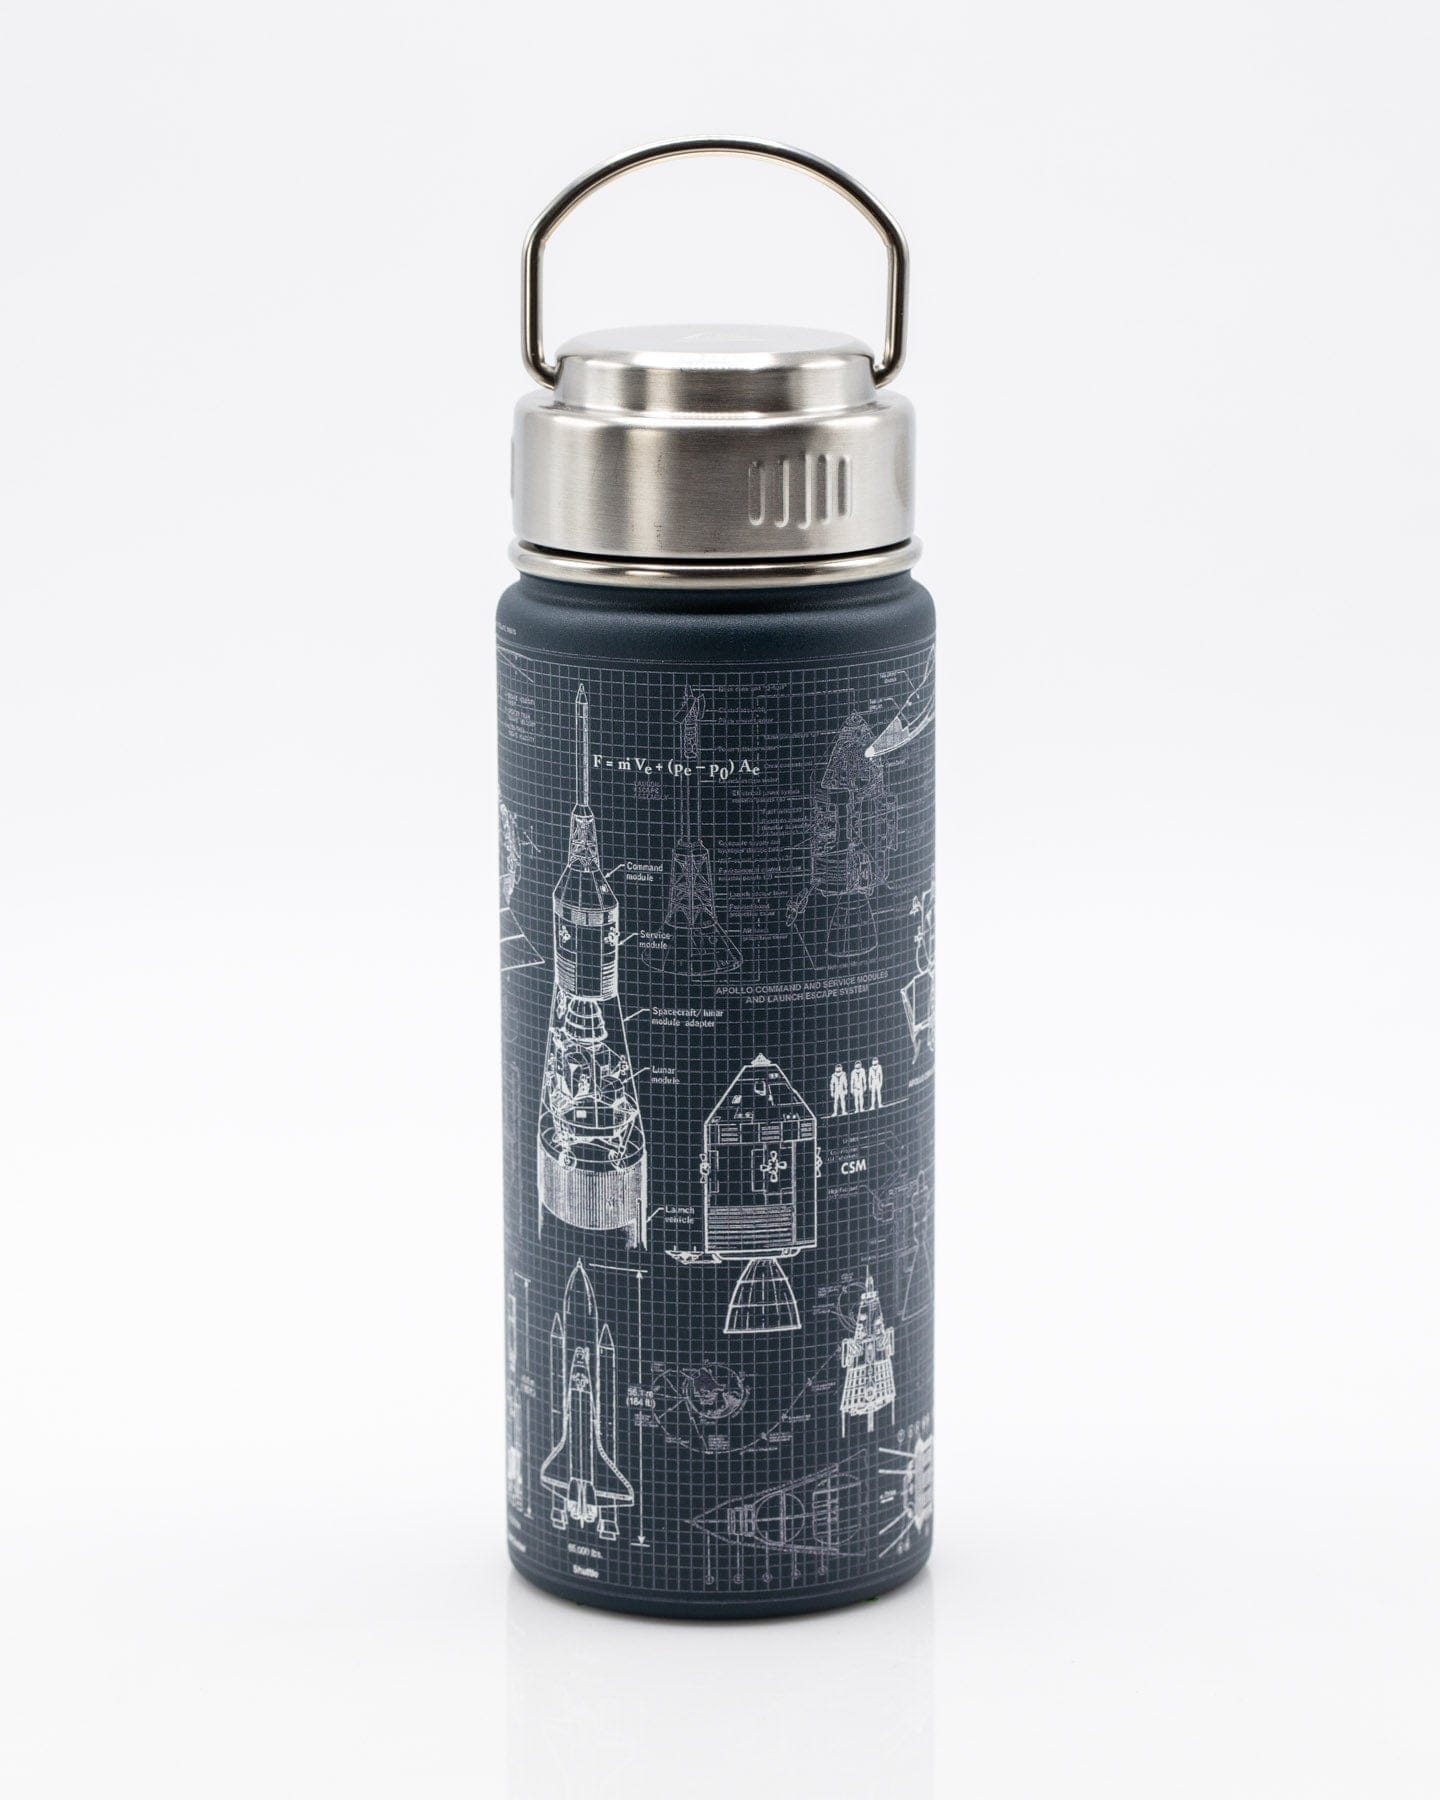  Star Wars Thermos Flask 515 ml : Home & Kitchen